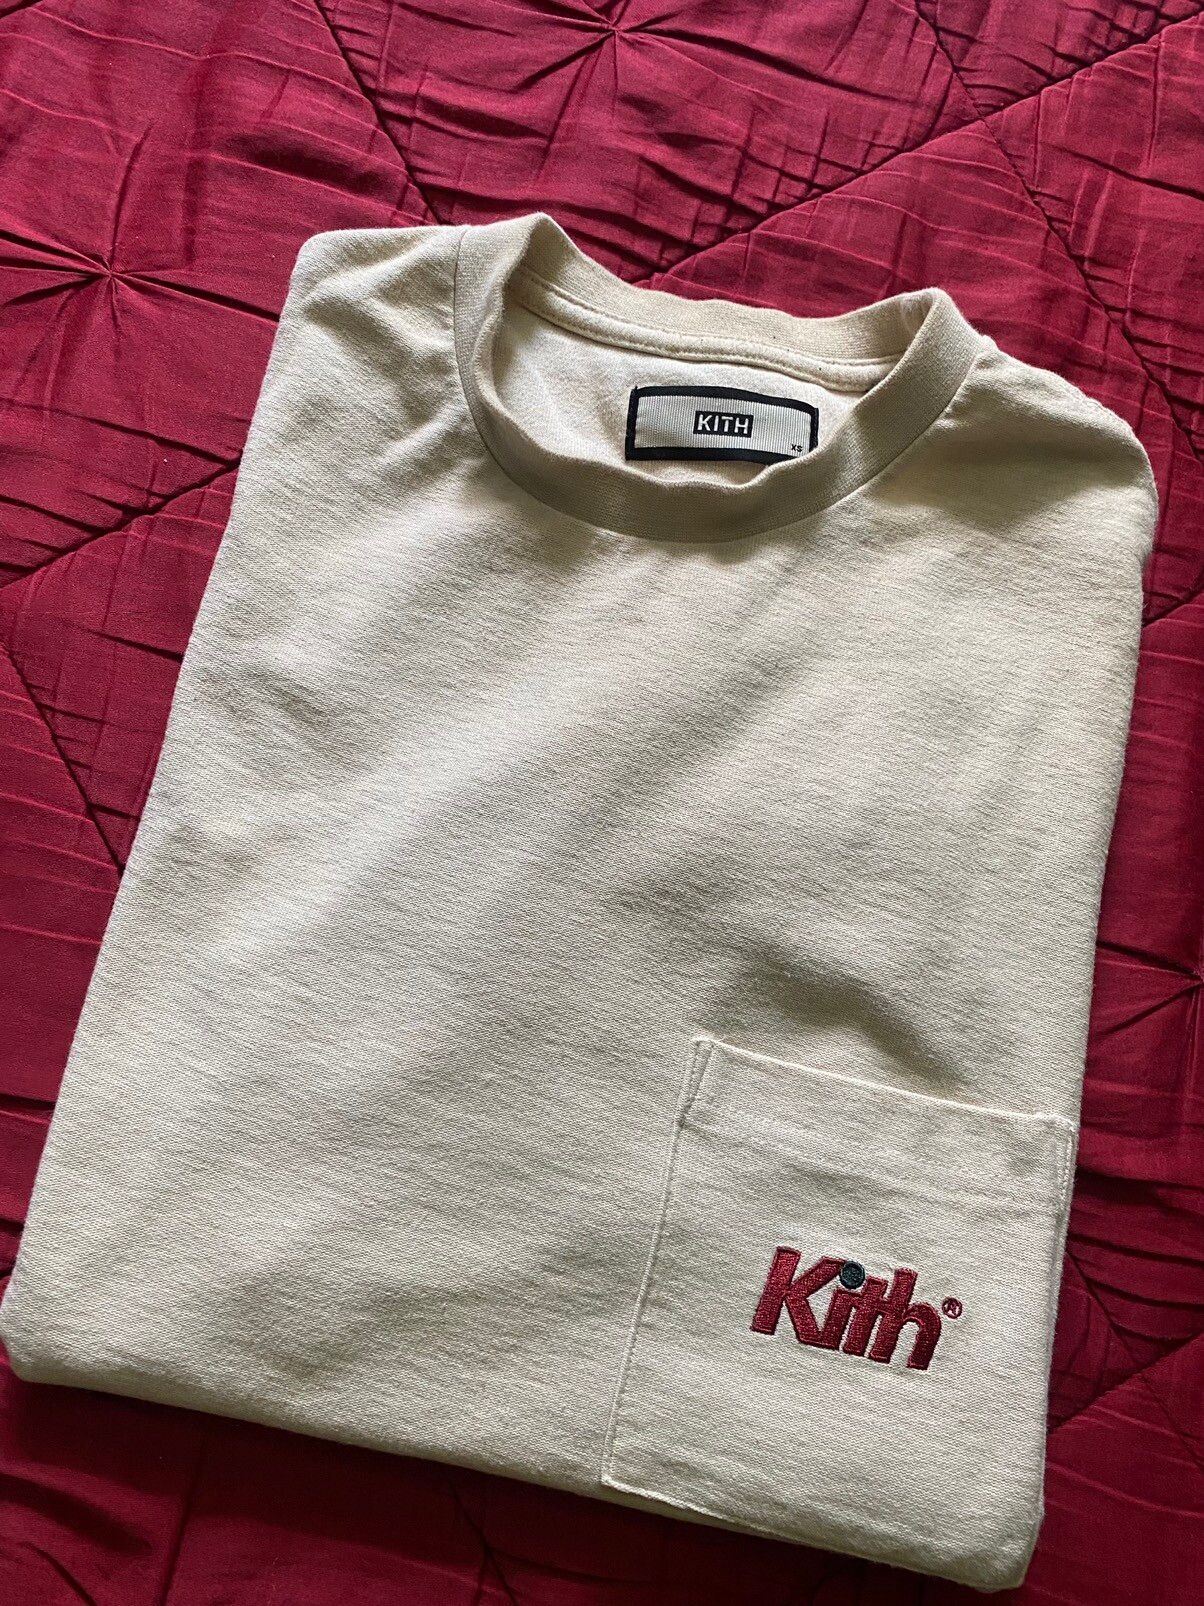 Kith Kith Pocket TShirt | Grailed